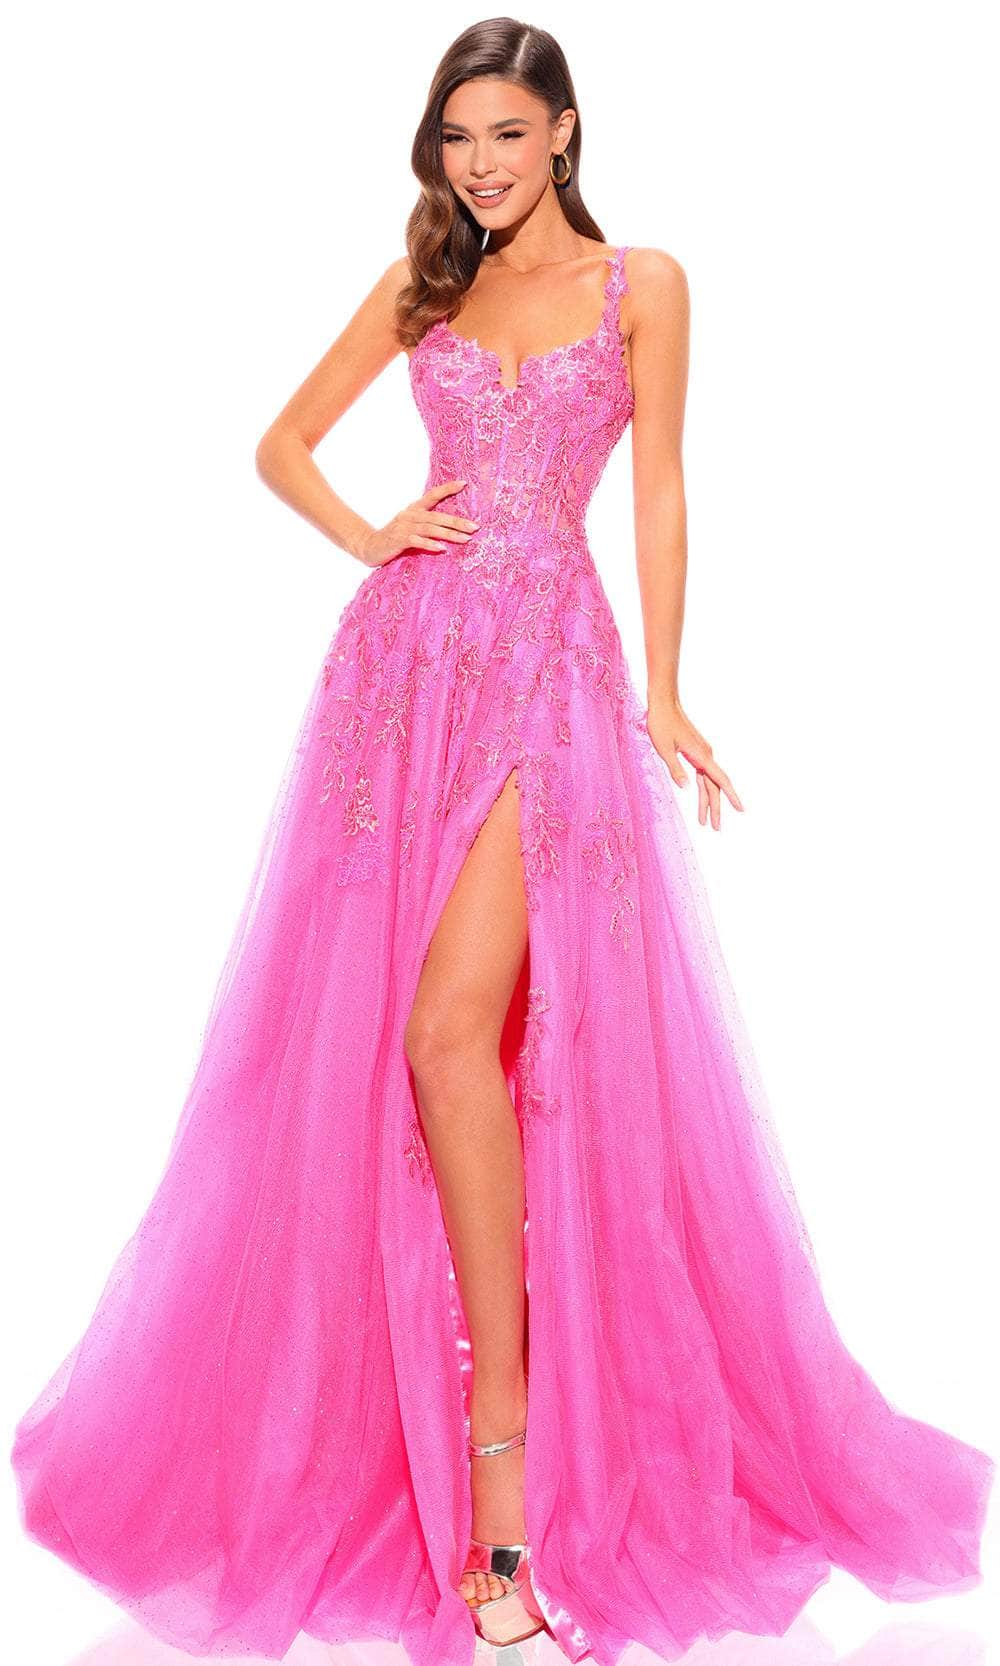 Amarra 88849 - Lace Ornate Corset Prom Dress 2 / Fuchsia